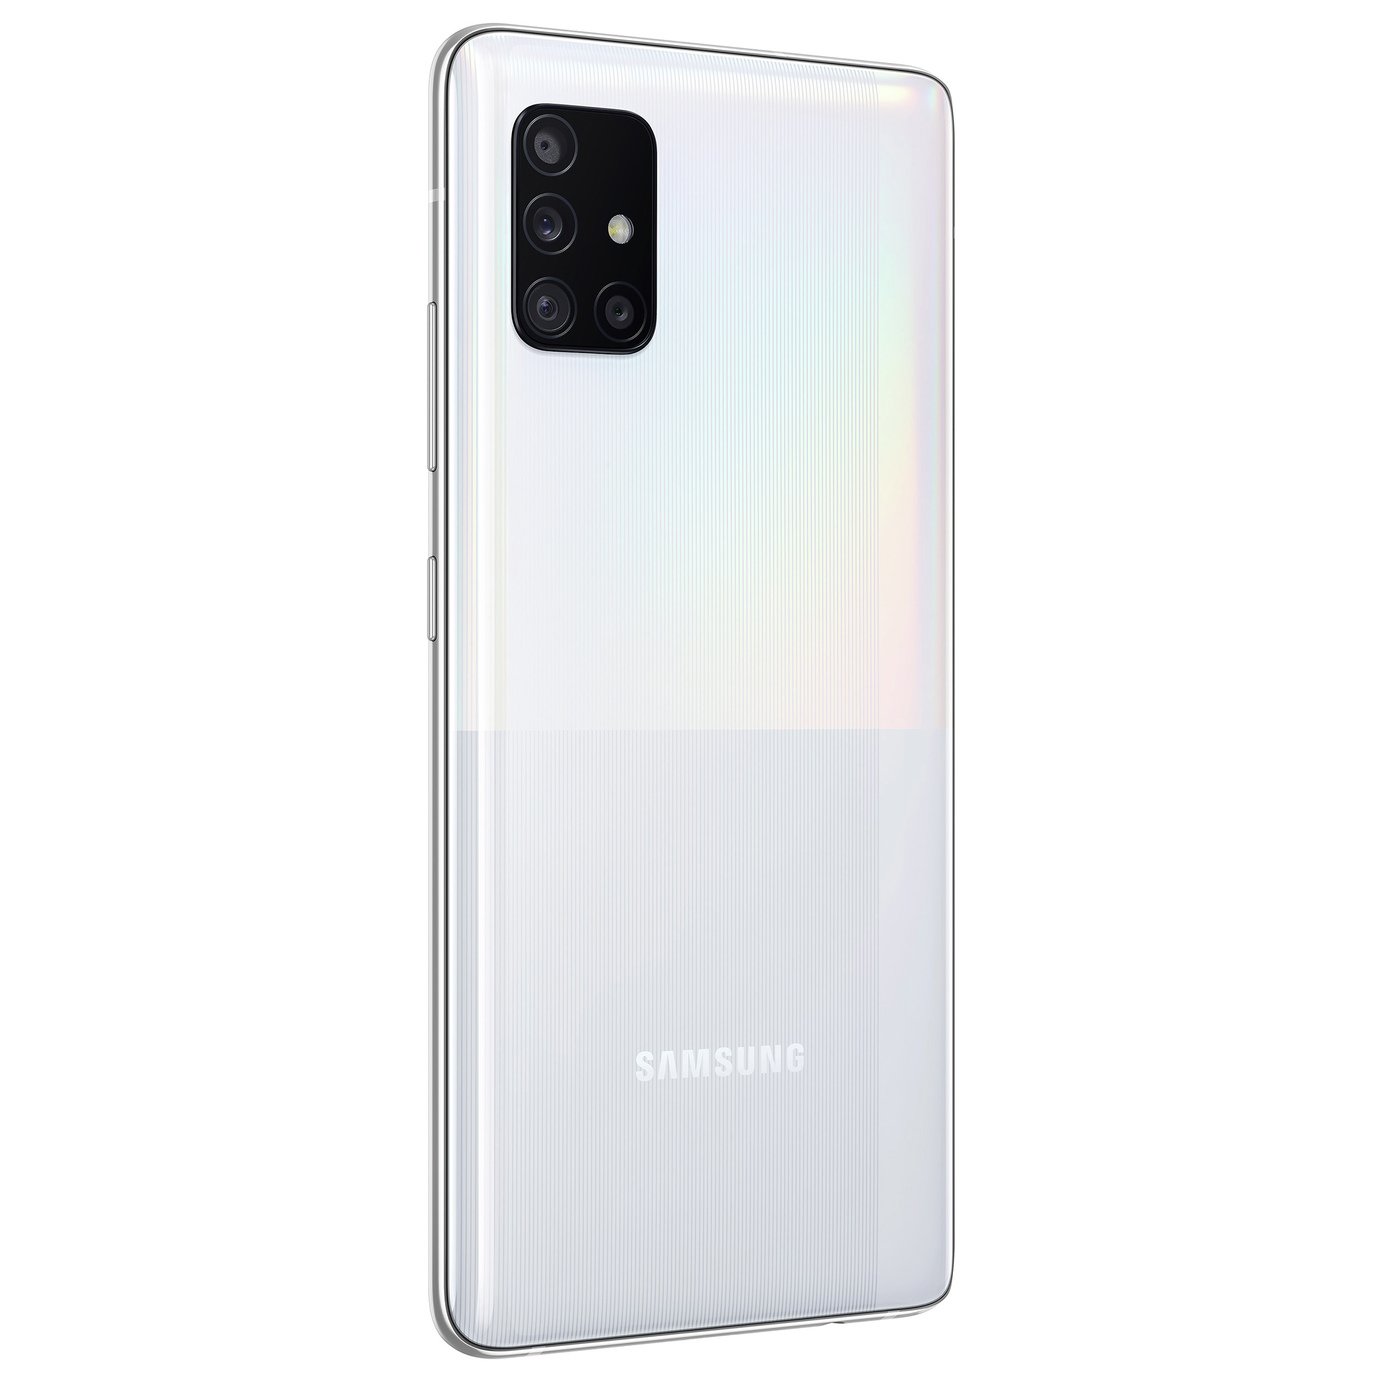 SIM Free Samsung A51 5G 128GB Mobile Phone-Prism Crush White Review